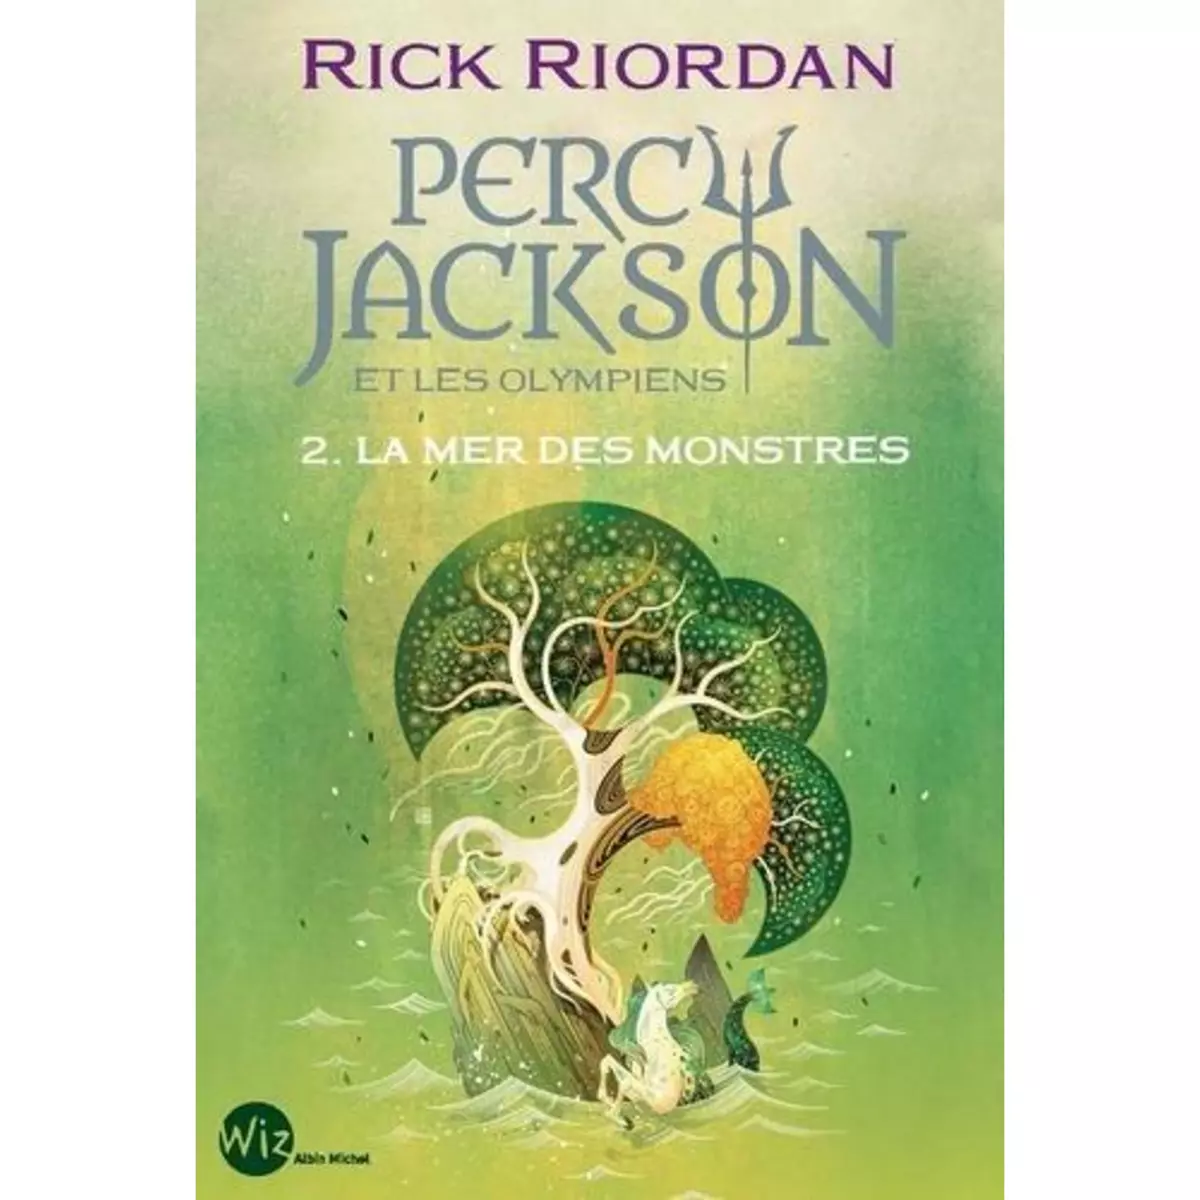  PERCY JACKSON ET LES OLYMPIENS TOME 2 : LA MER DES MONSTRES, Riordan Rick